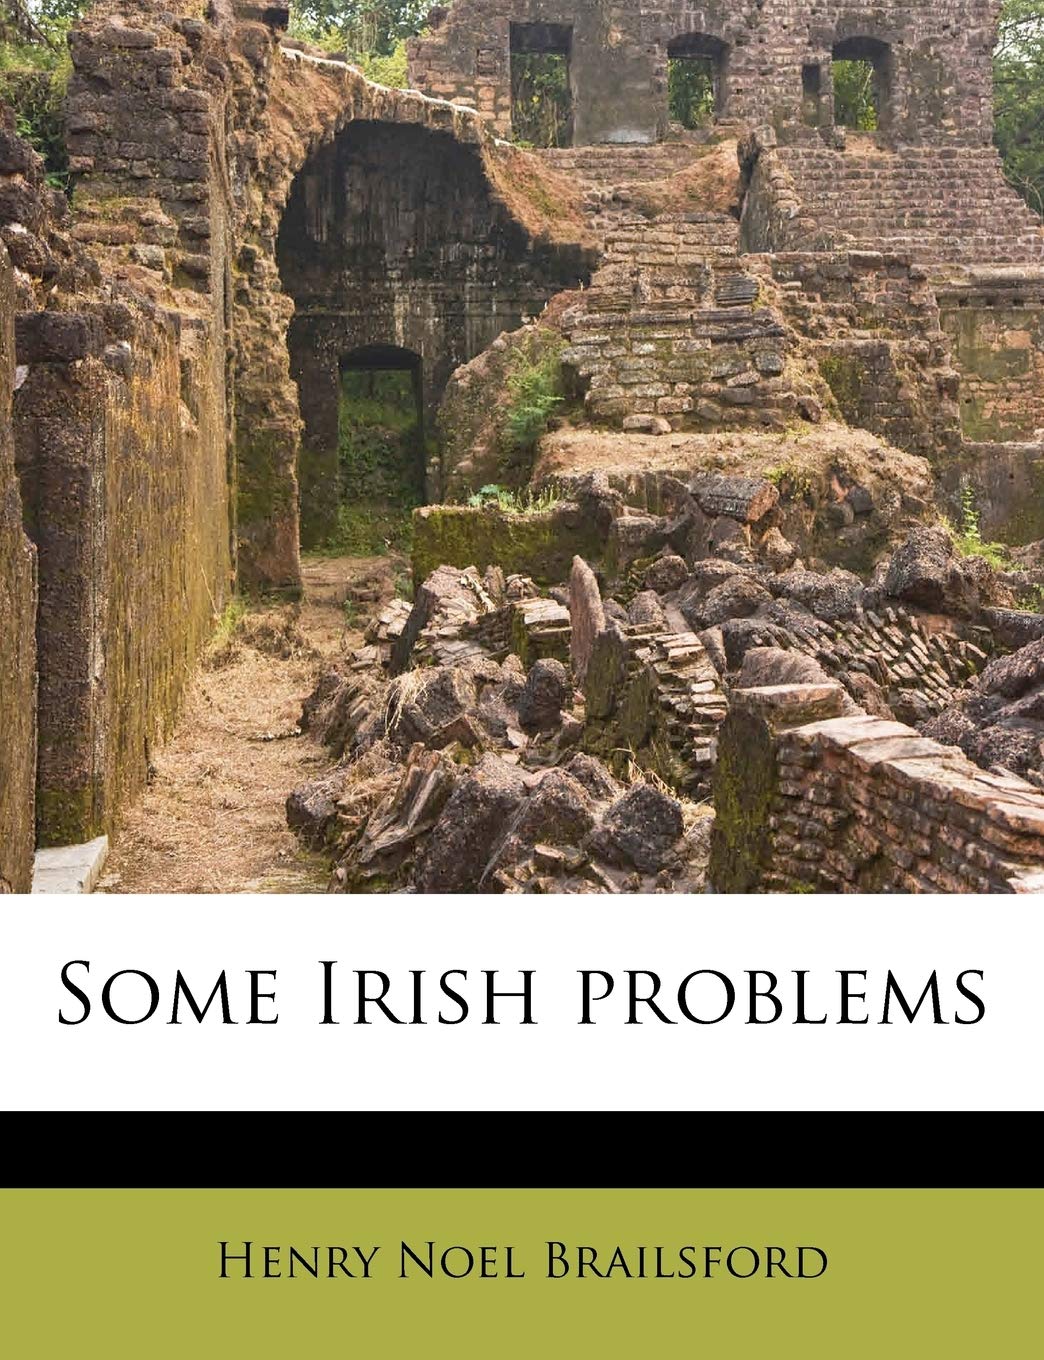 Some Irish problems